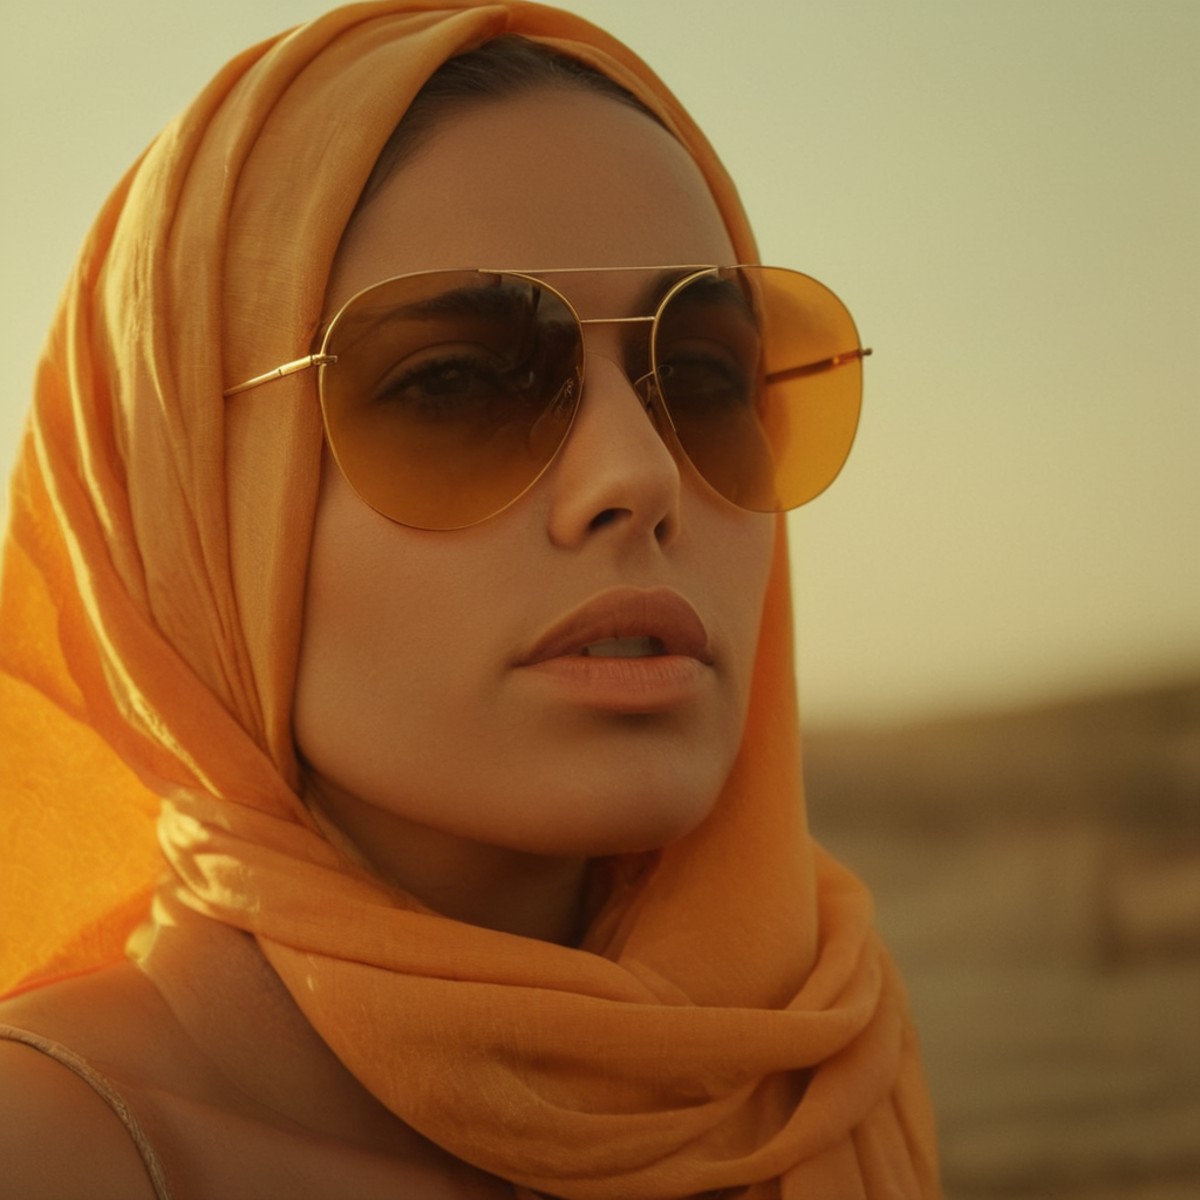 cinematic film still of  <lora:Warm Lighting Style:1>
warm light,a woman wearing a headscarf and sunglasses,warm lighting ...